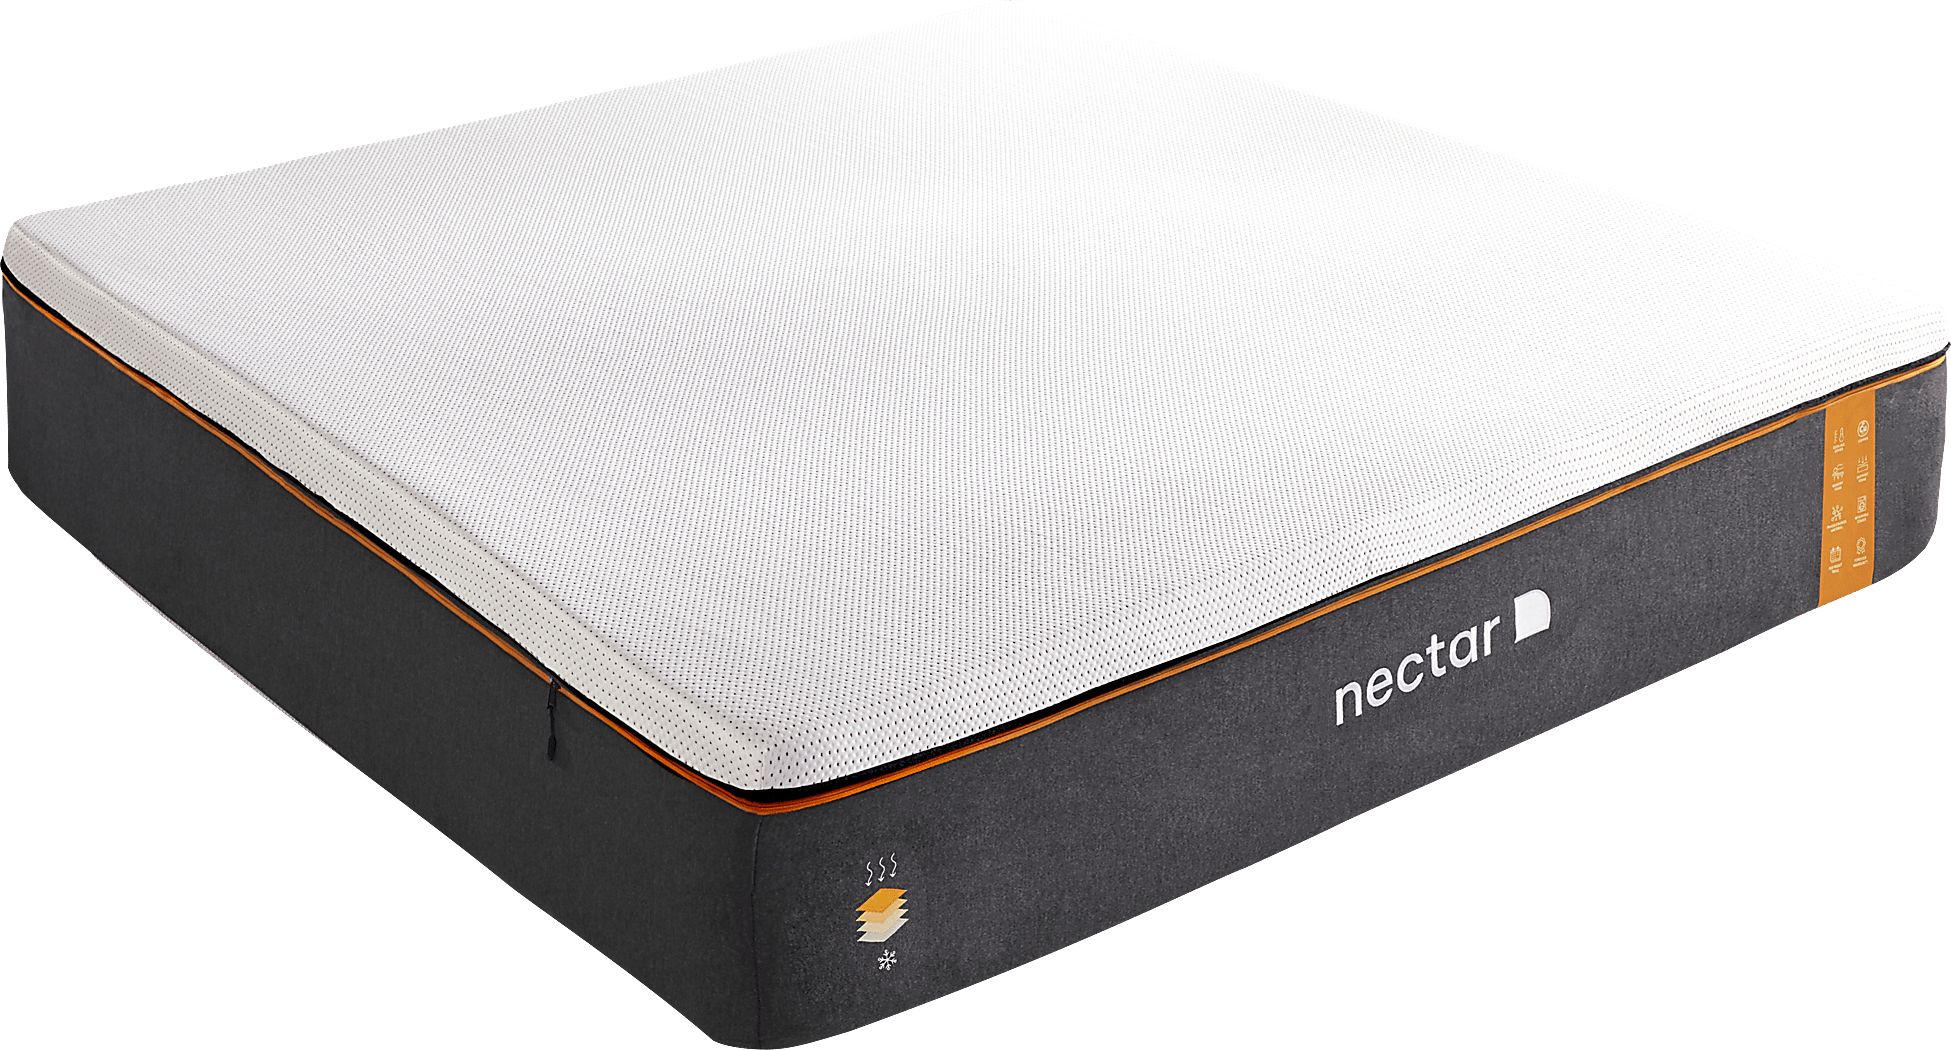 prices on nectar mattress king size foundation